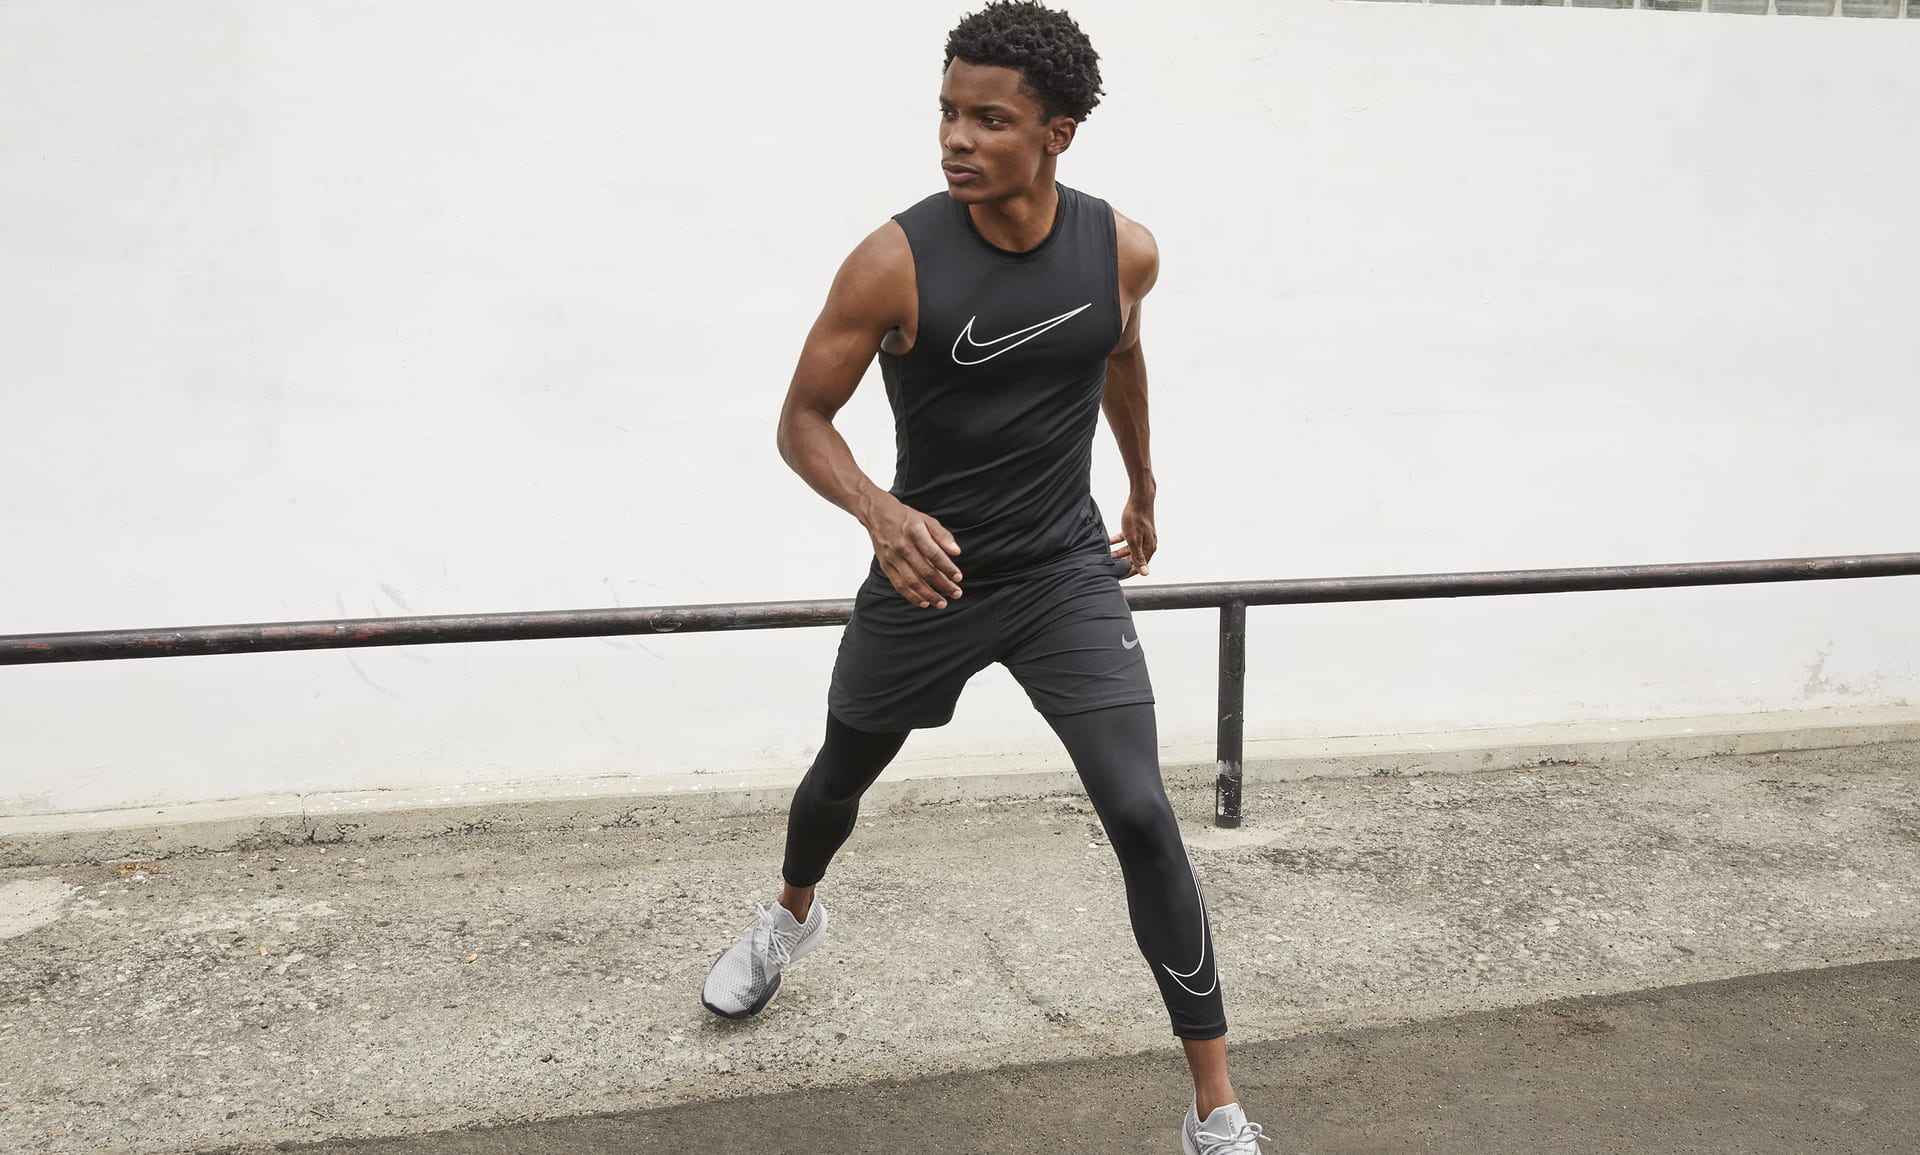 Nike Pro Dri-FIT Men's Slim Fit Sleeveless Top.